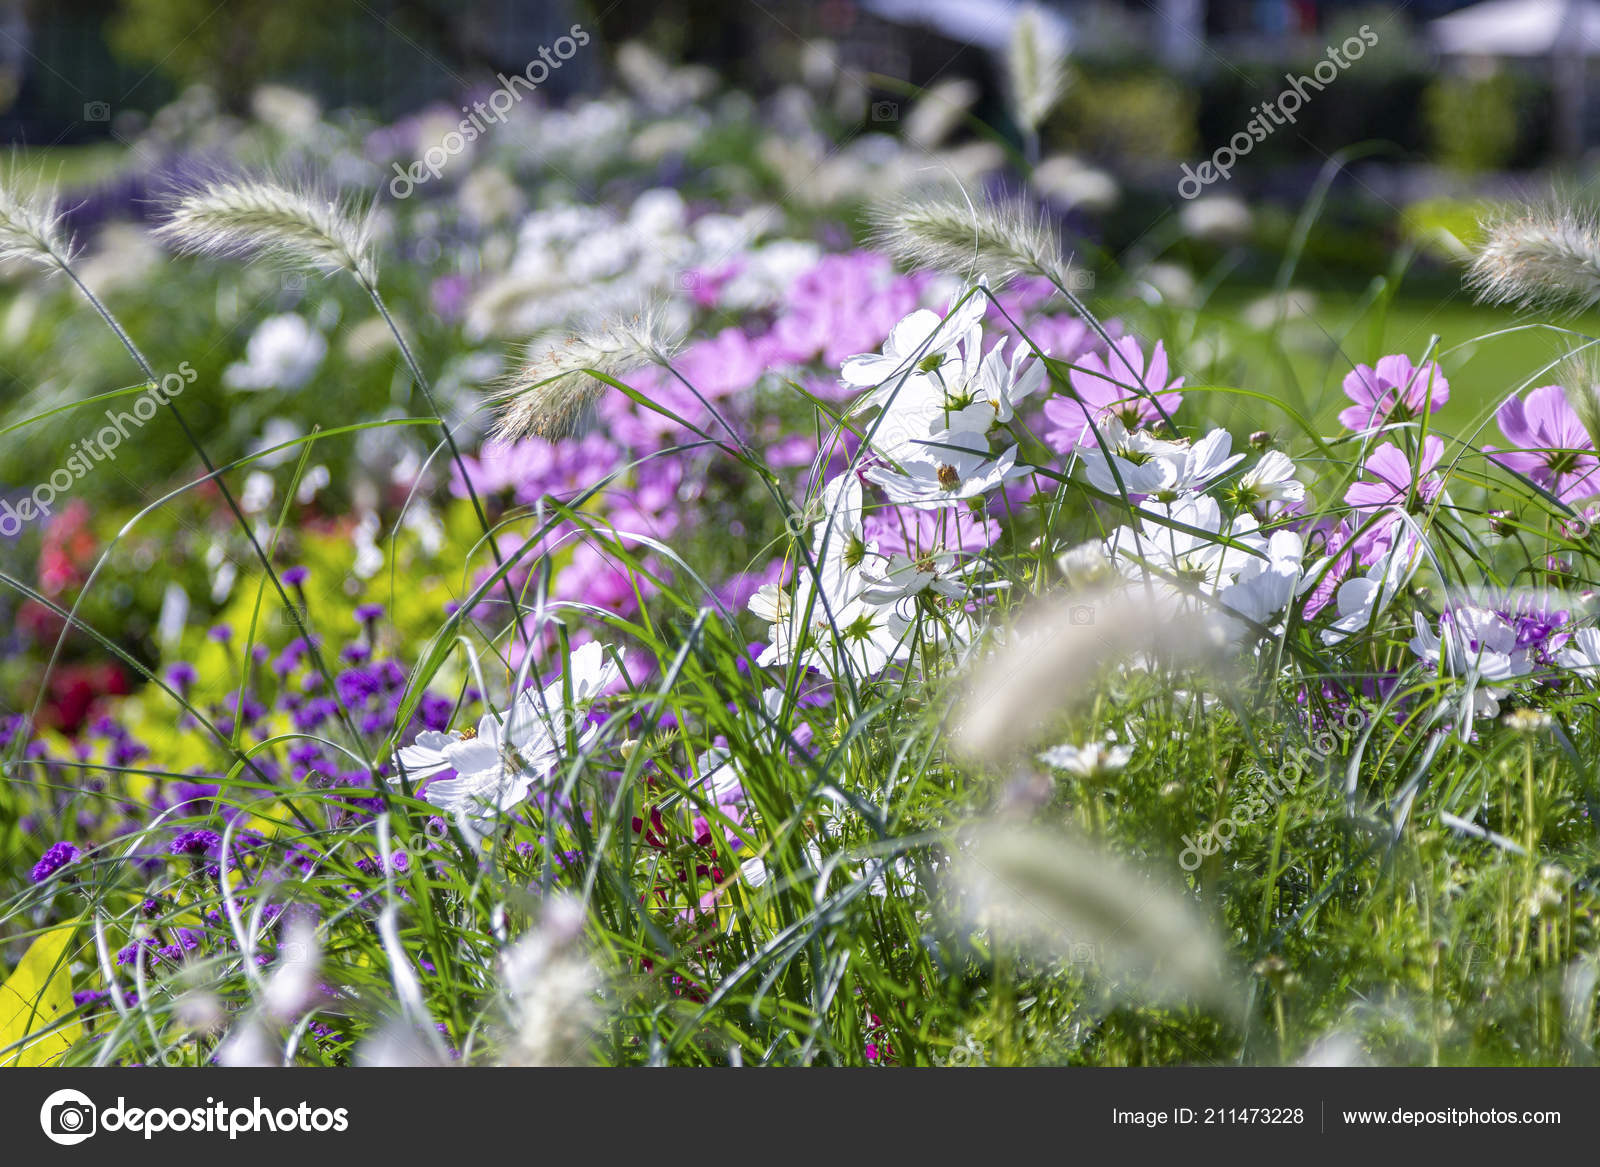 Violet White Garden Cosmos Flower Bed Flowers Stock Photo C Huettenhoelscher 211473228